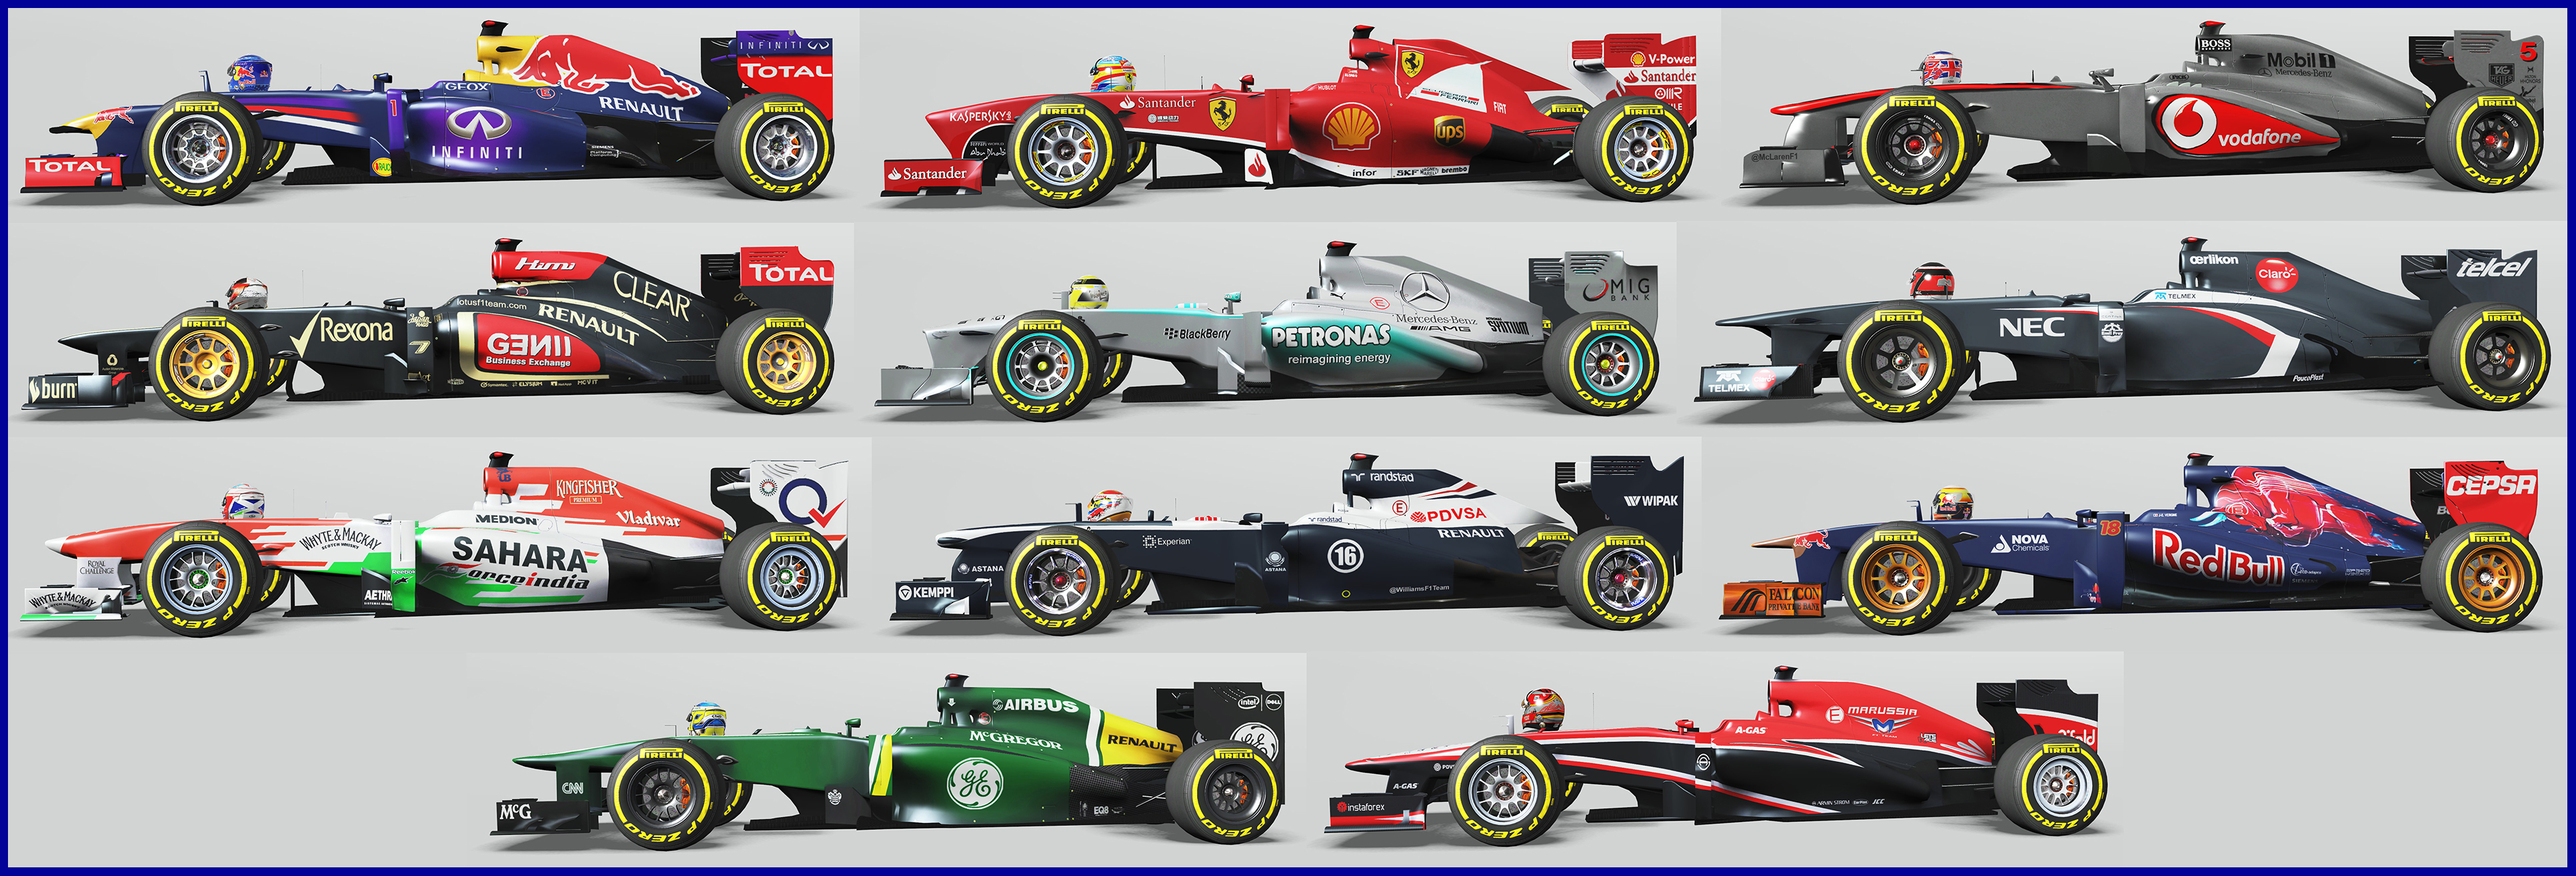 F1-2013 Cars.jpg